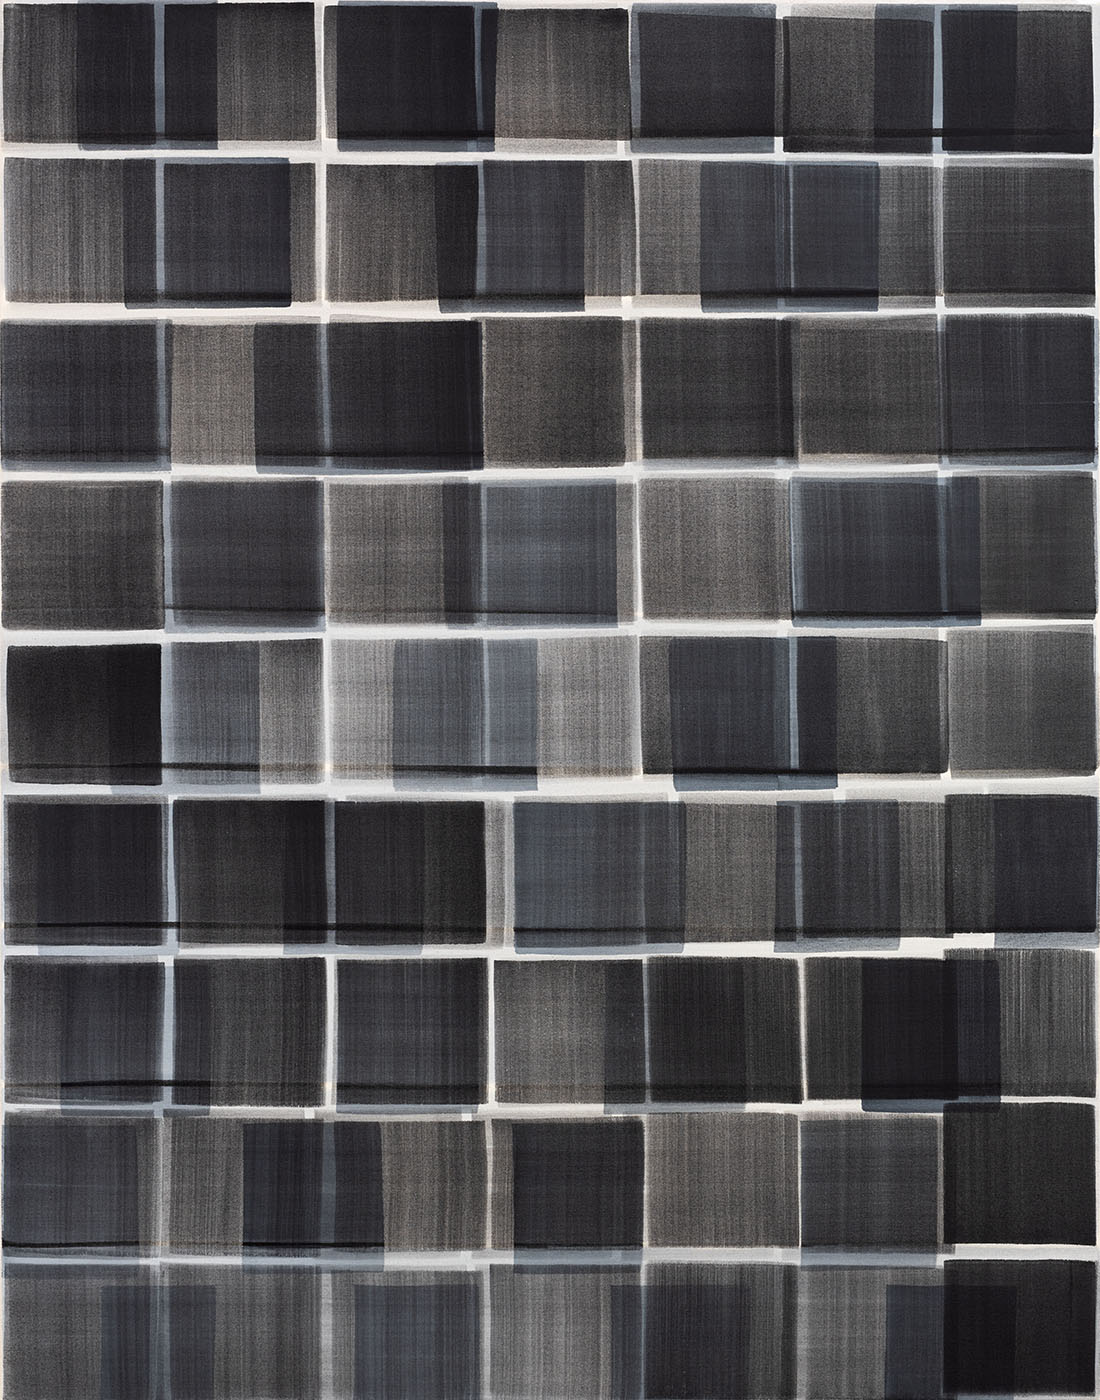 Nikola Dimitrov, Fuge III, 2021, Pigmente, Bindemittel auf Leinwand, 140 × 110 cm